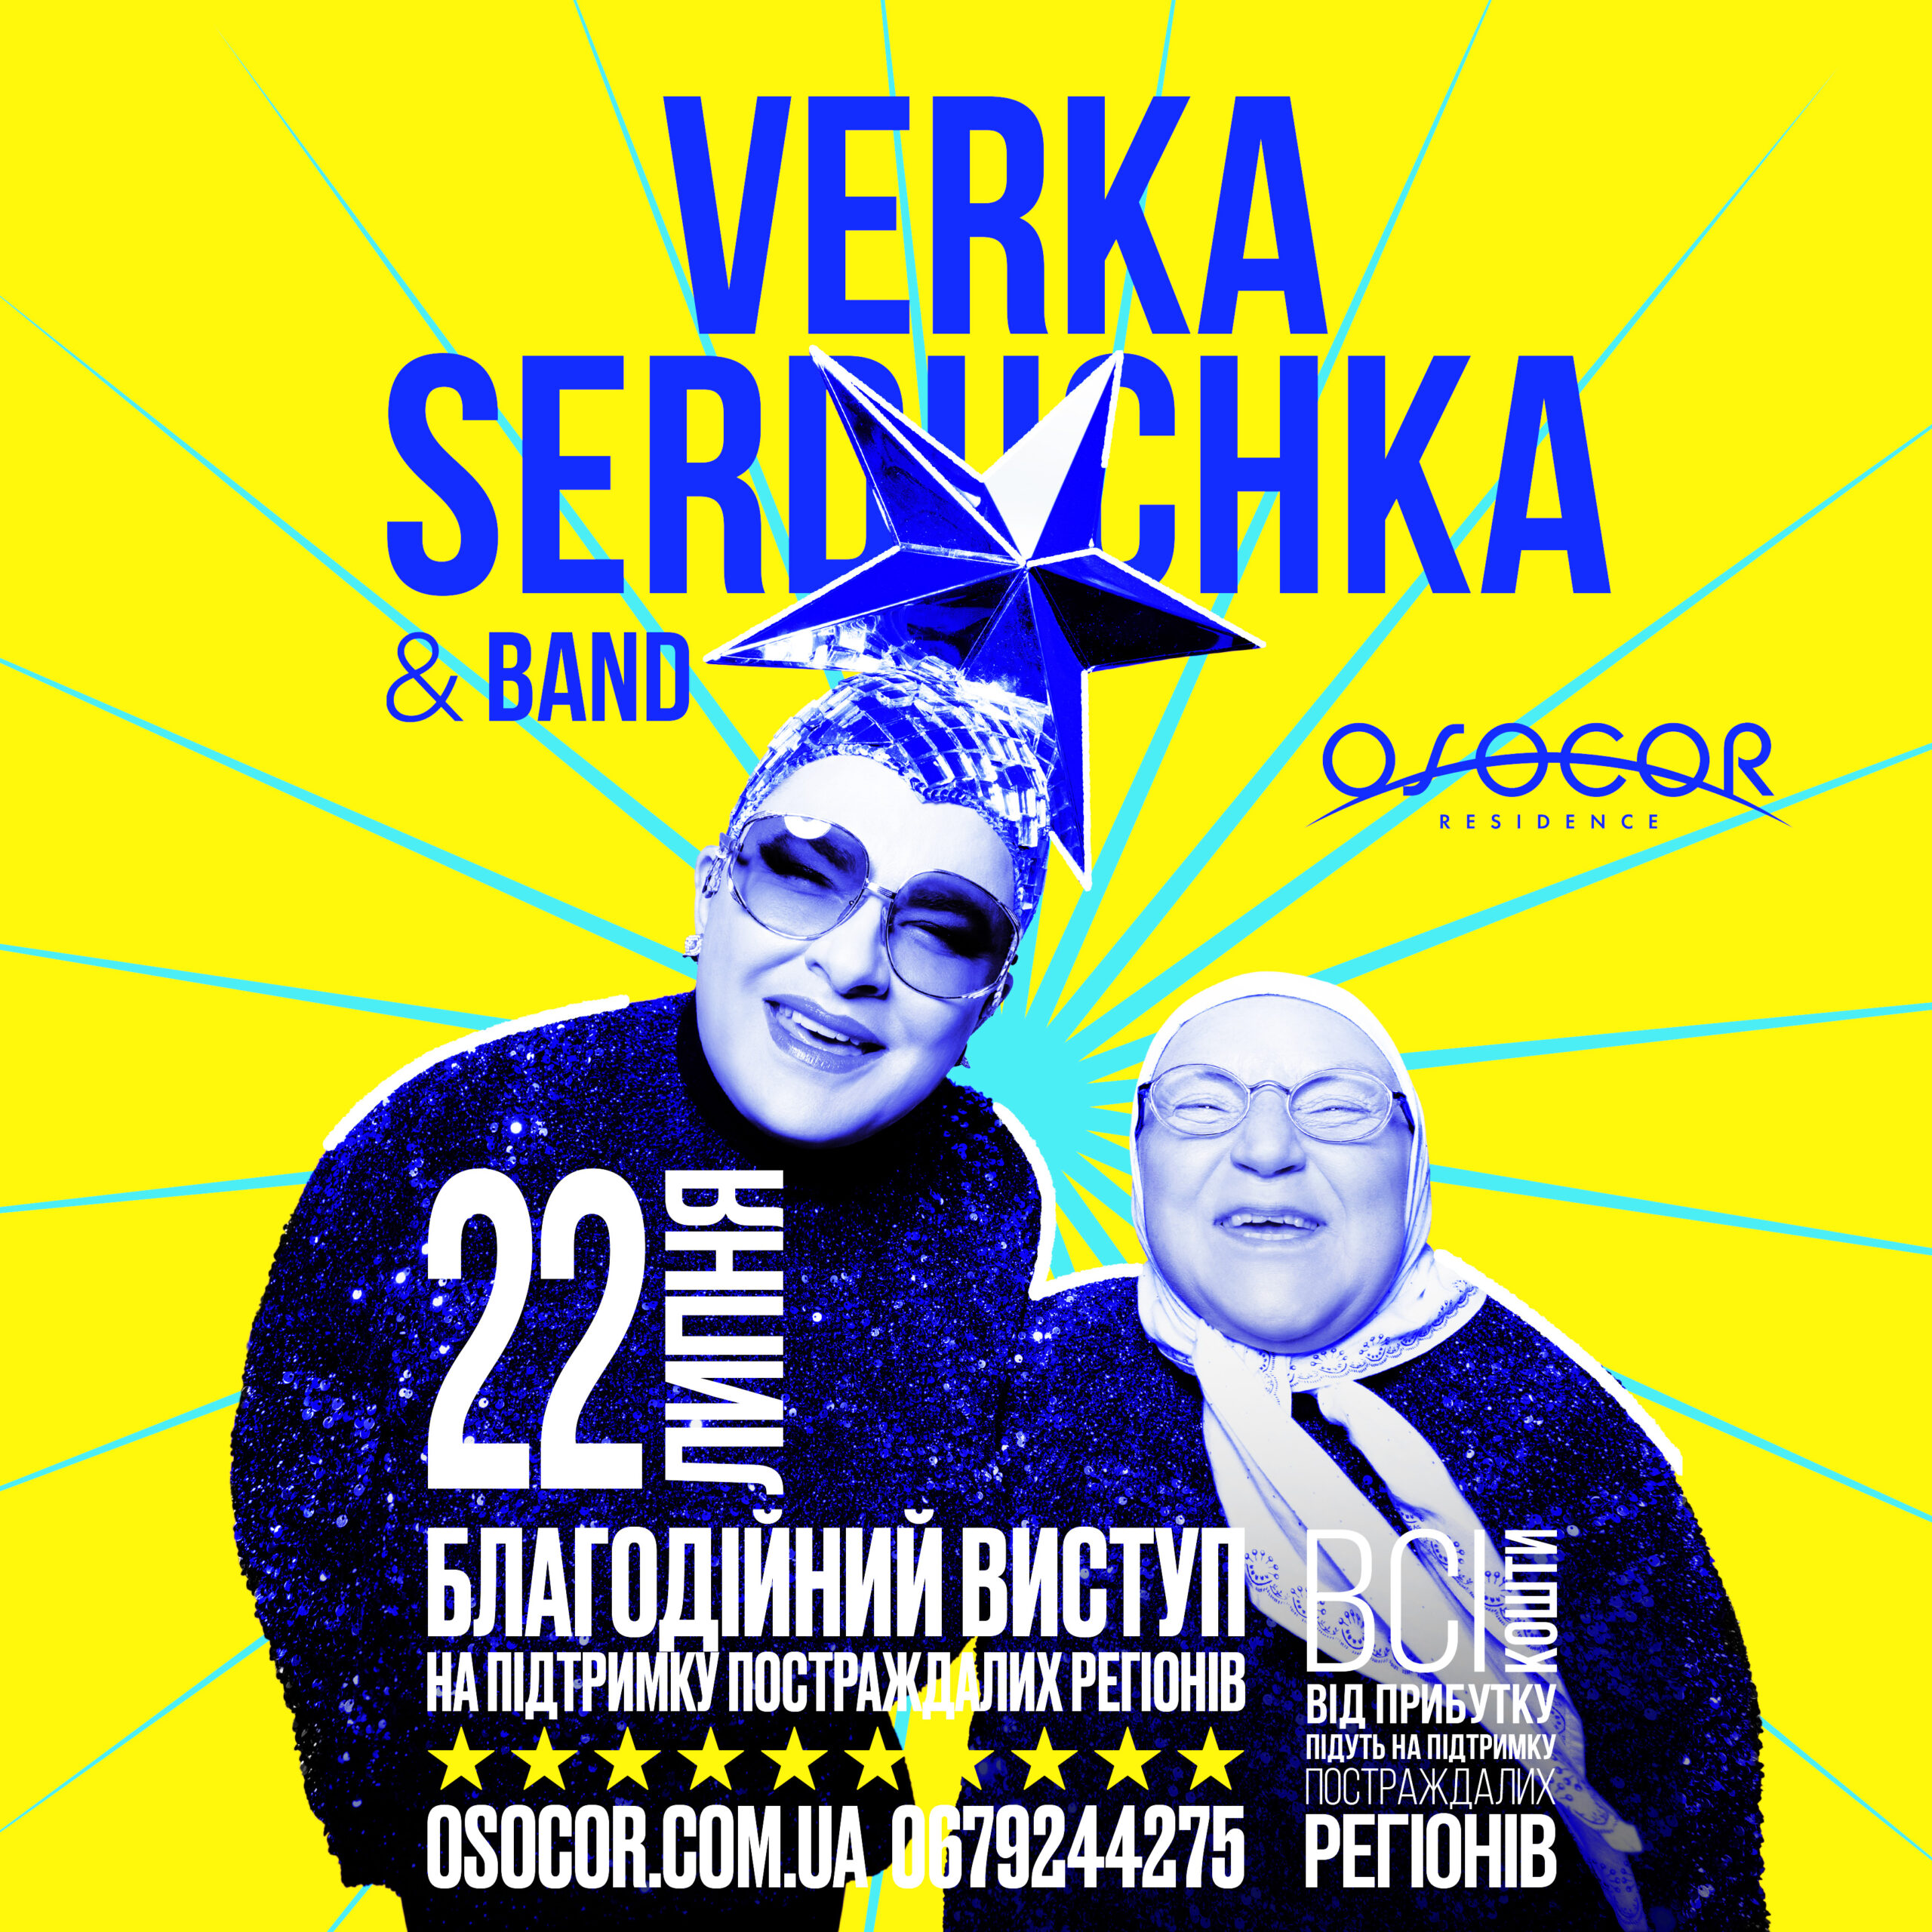 Verka Serduchka & Band дадуть благодійний концерт в Osocor Residence - 1 - изображение